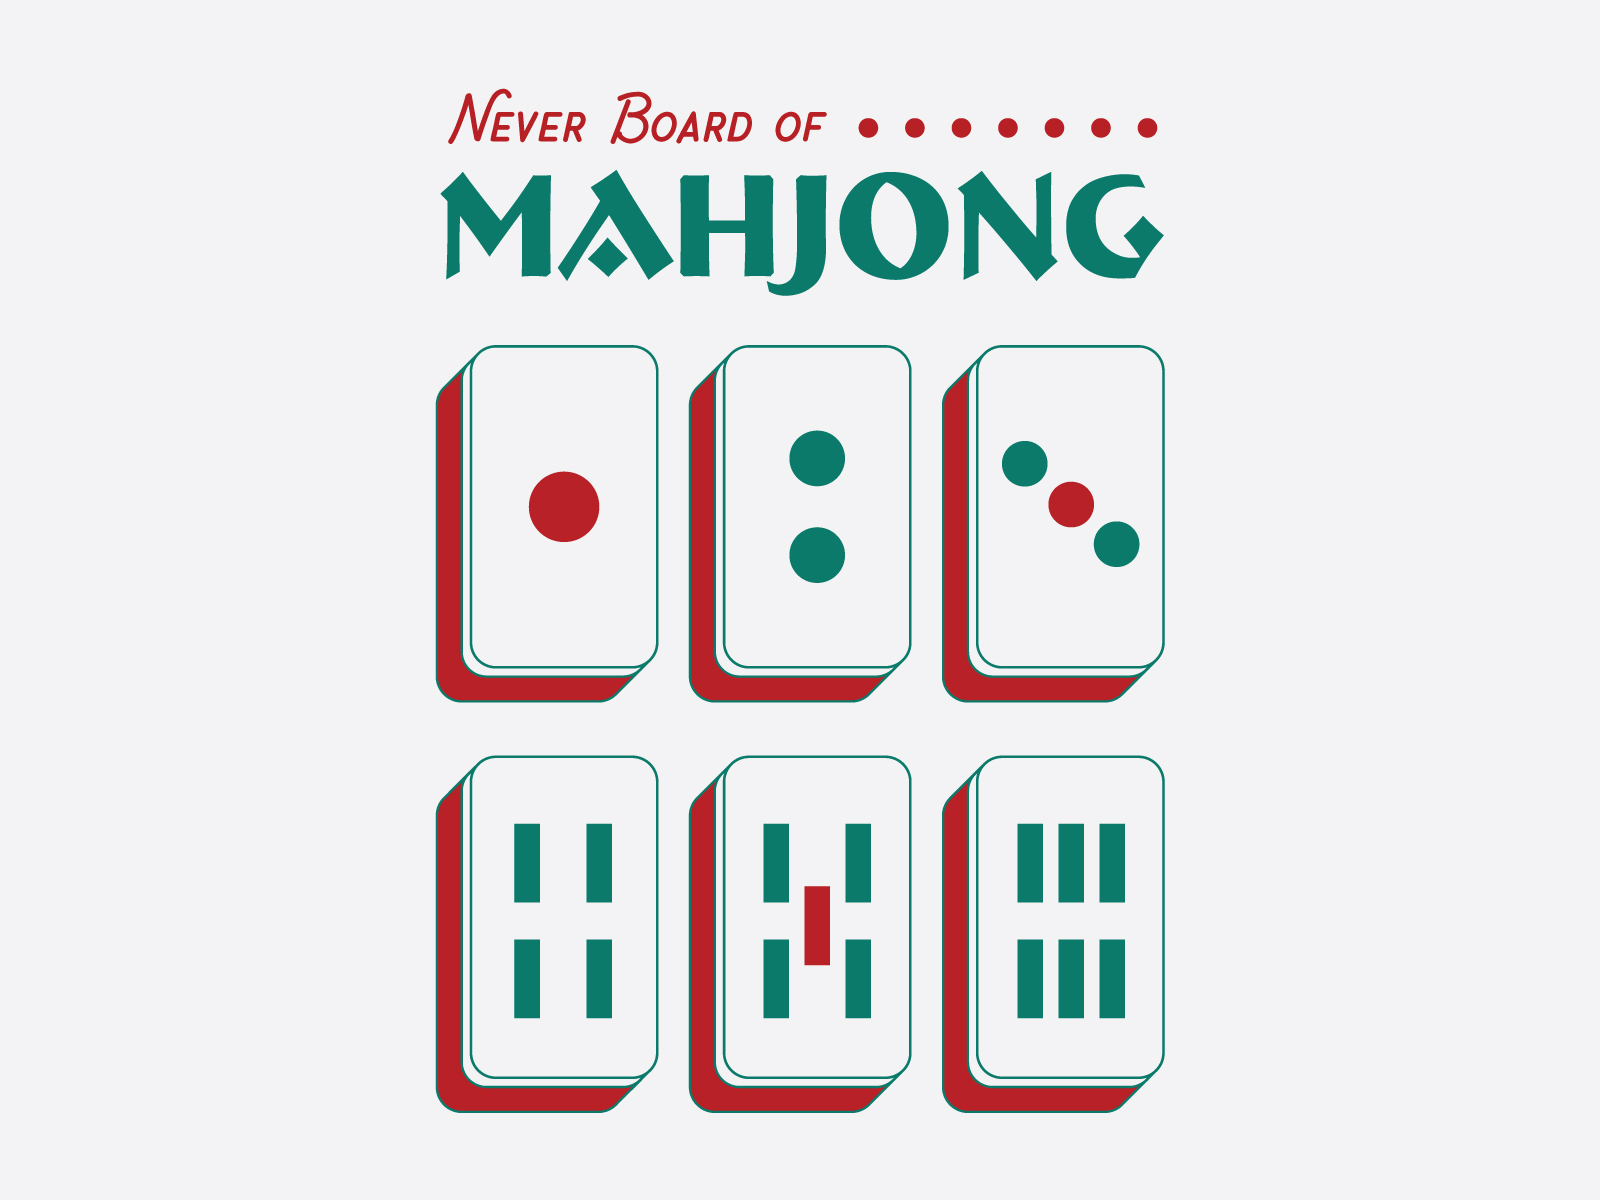 microsoft mahjong themes